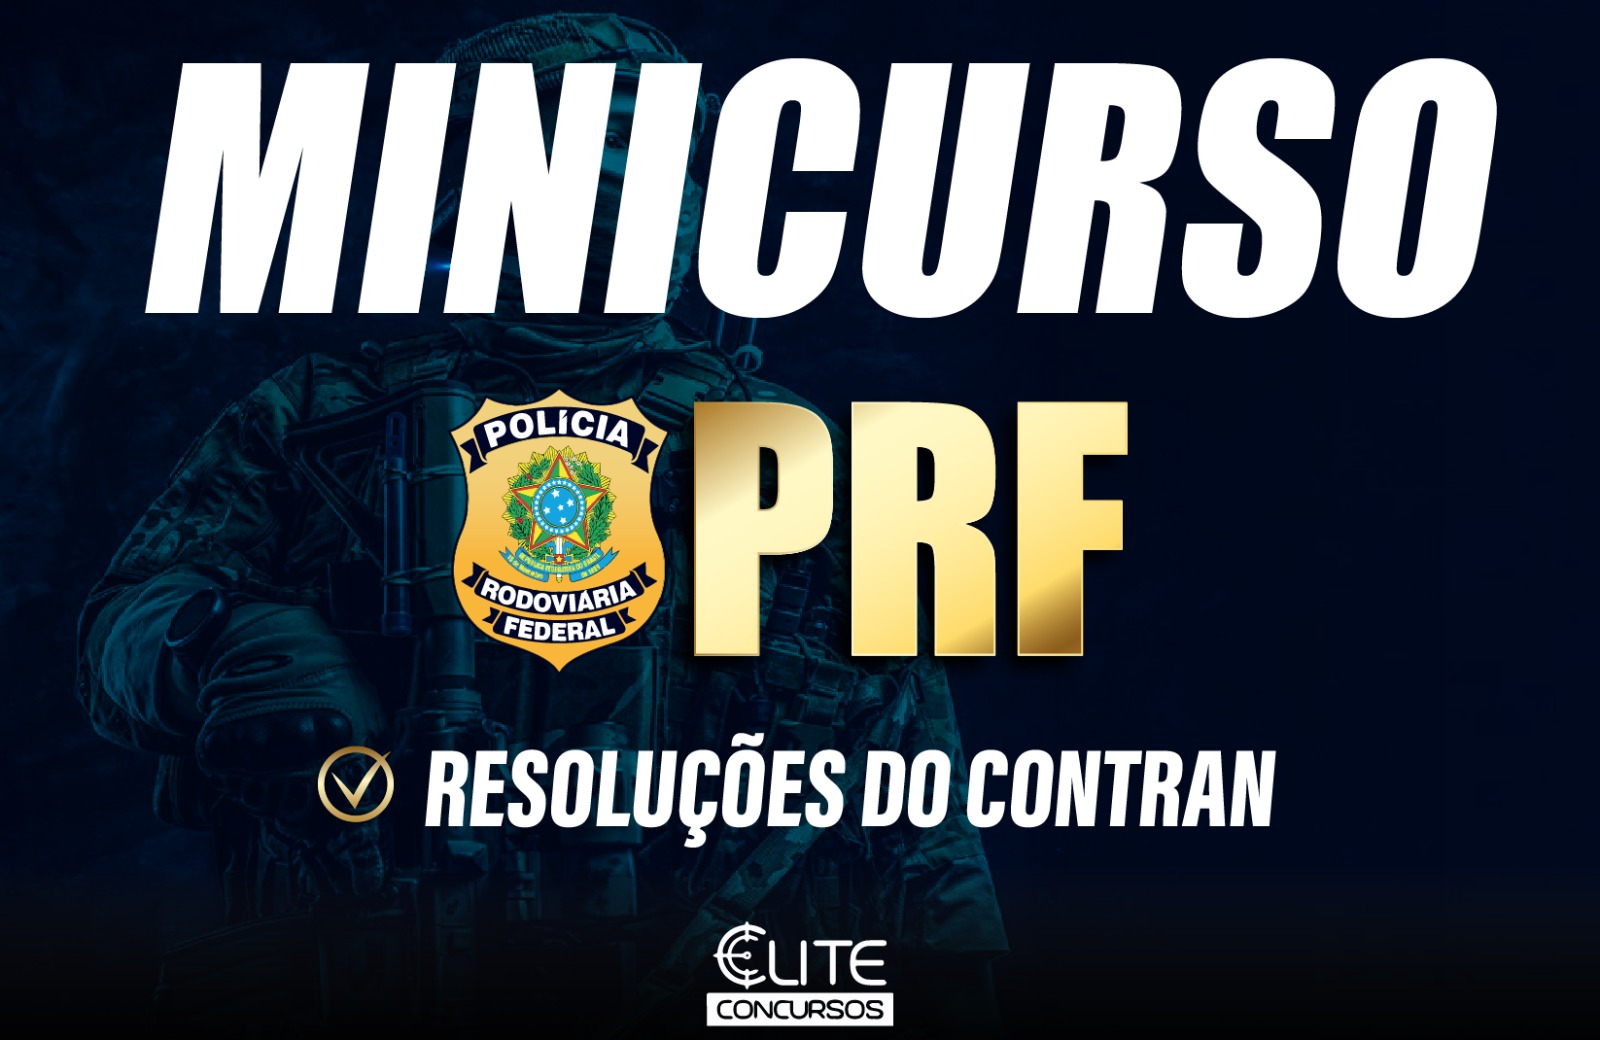 MINICURSO DE RESOLU��ES DO CONTRAN - PRF - 25/05